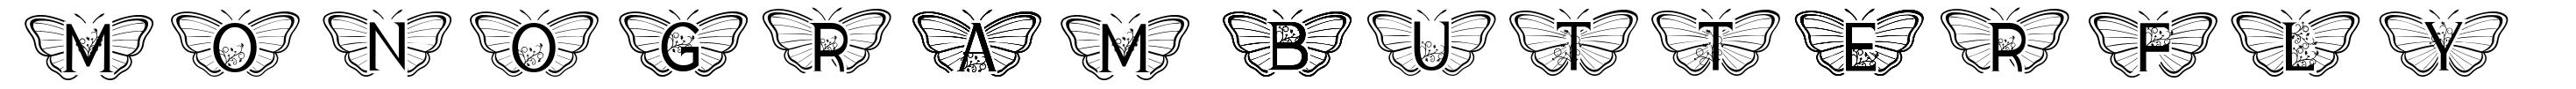 Monogram Butterfly font